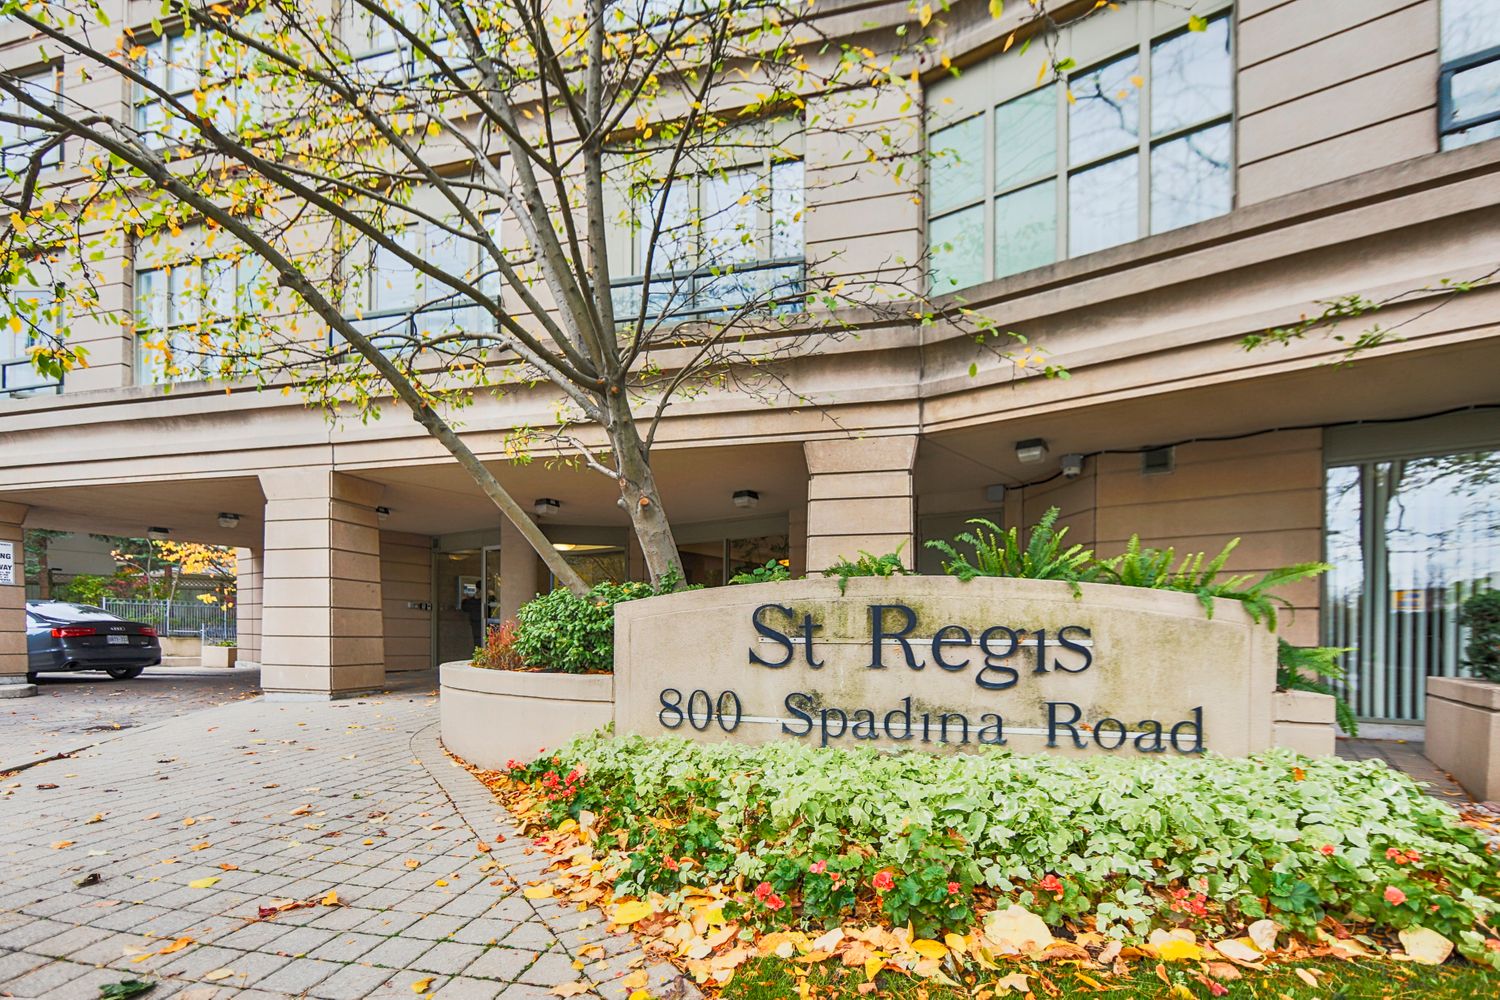 800 Spadina Road. St Regis is located in  Midtown, Toronto - image #4 of 4